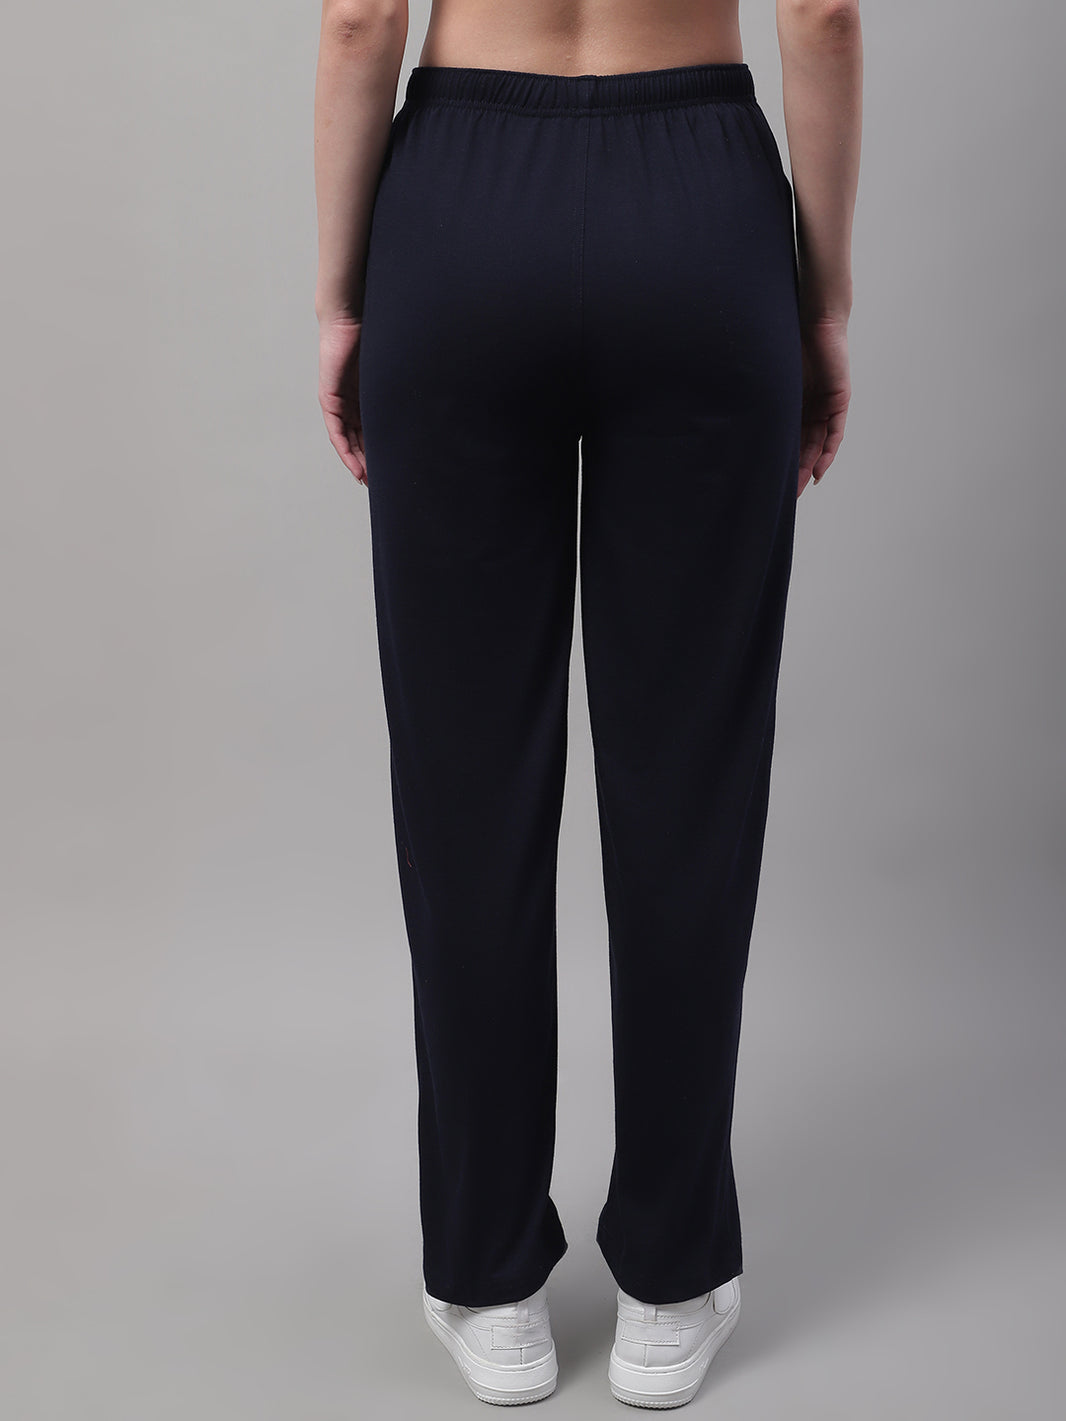 Vimal Jonney Navy Blue Regular fit Cotton Trackpant for Women(Zip of 1 Side Pocket)